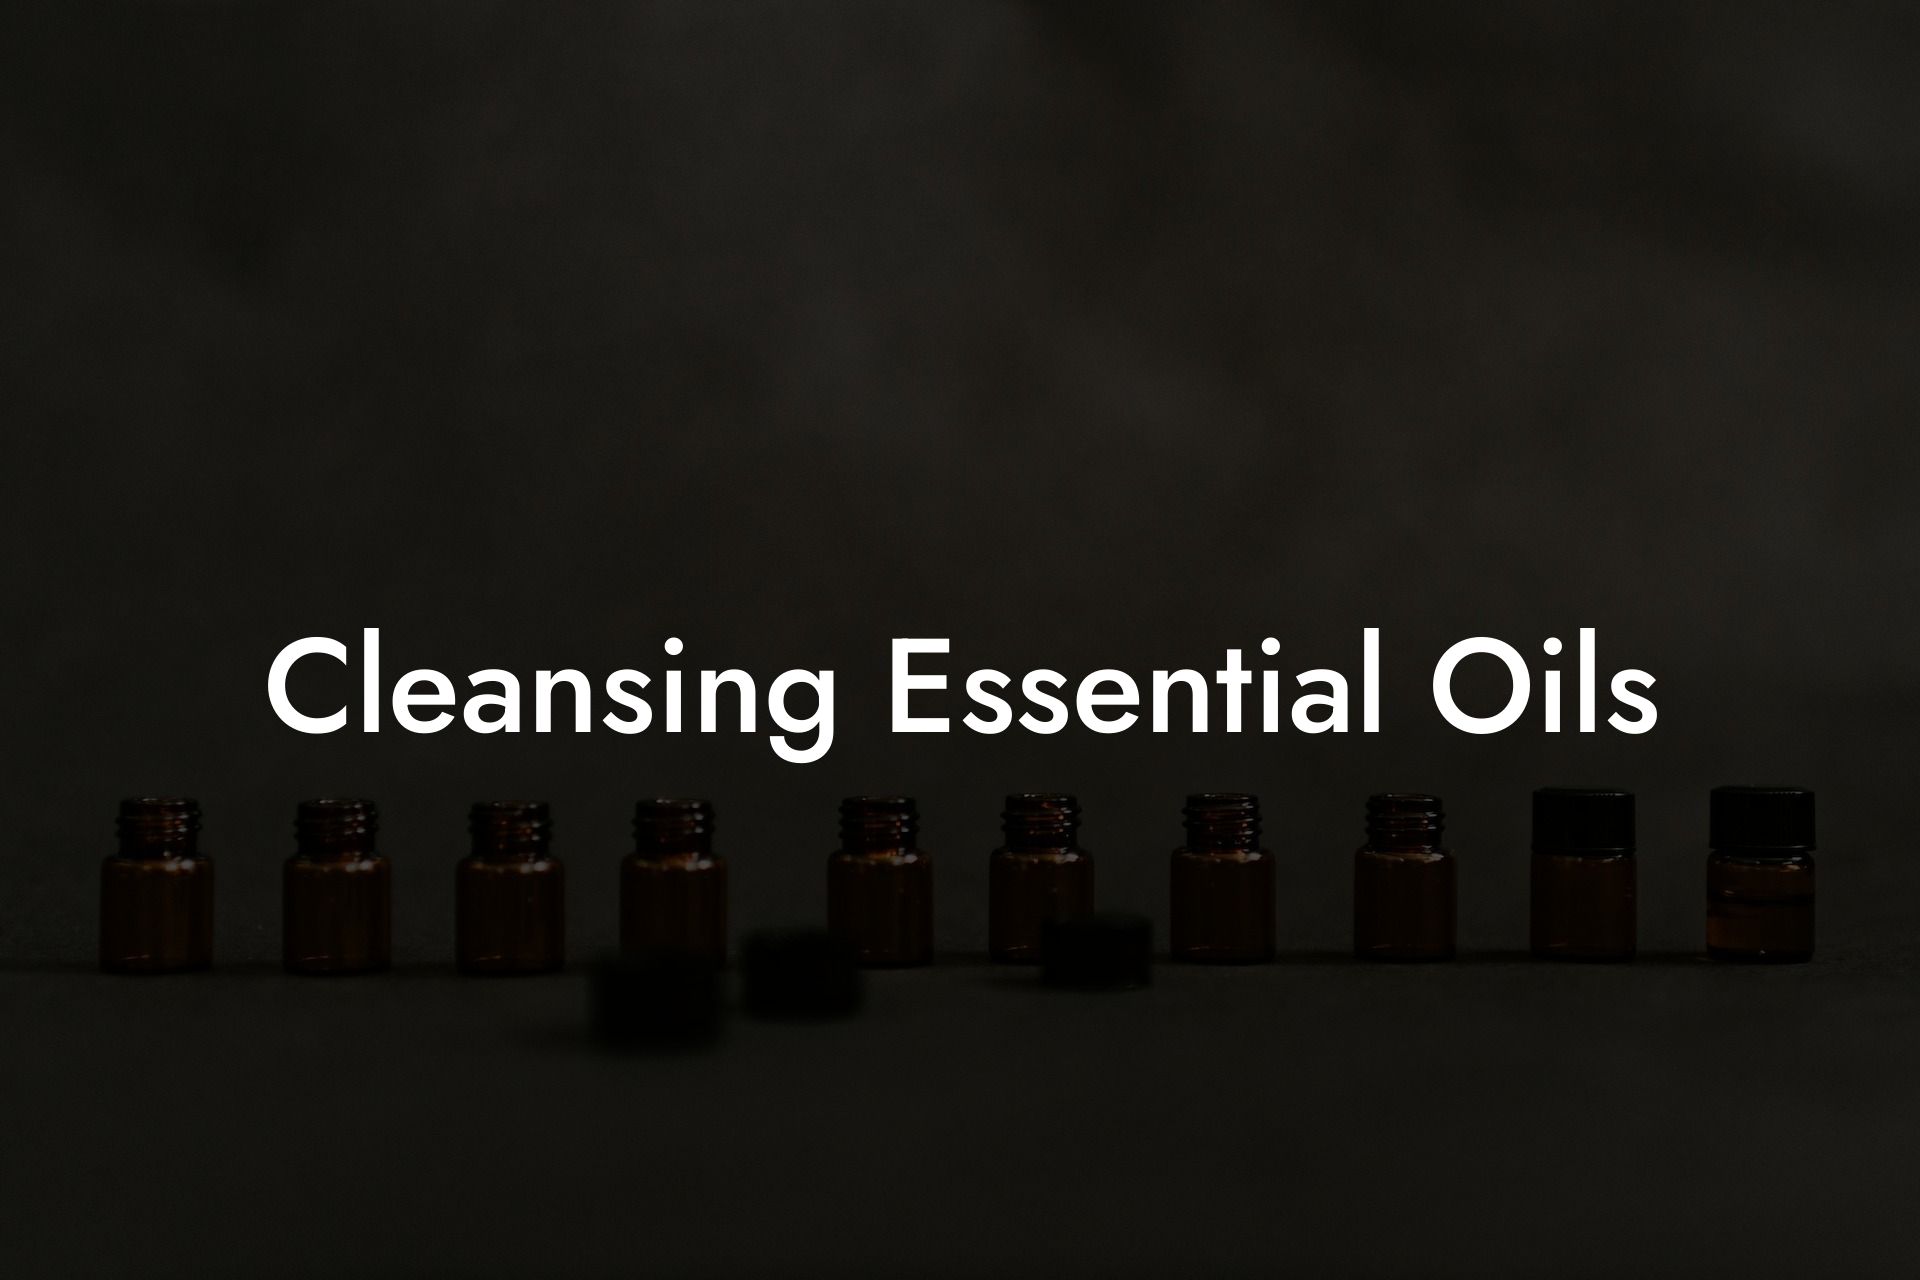 Cleansing Essential Oils